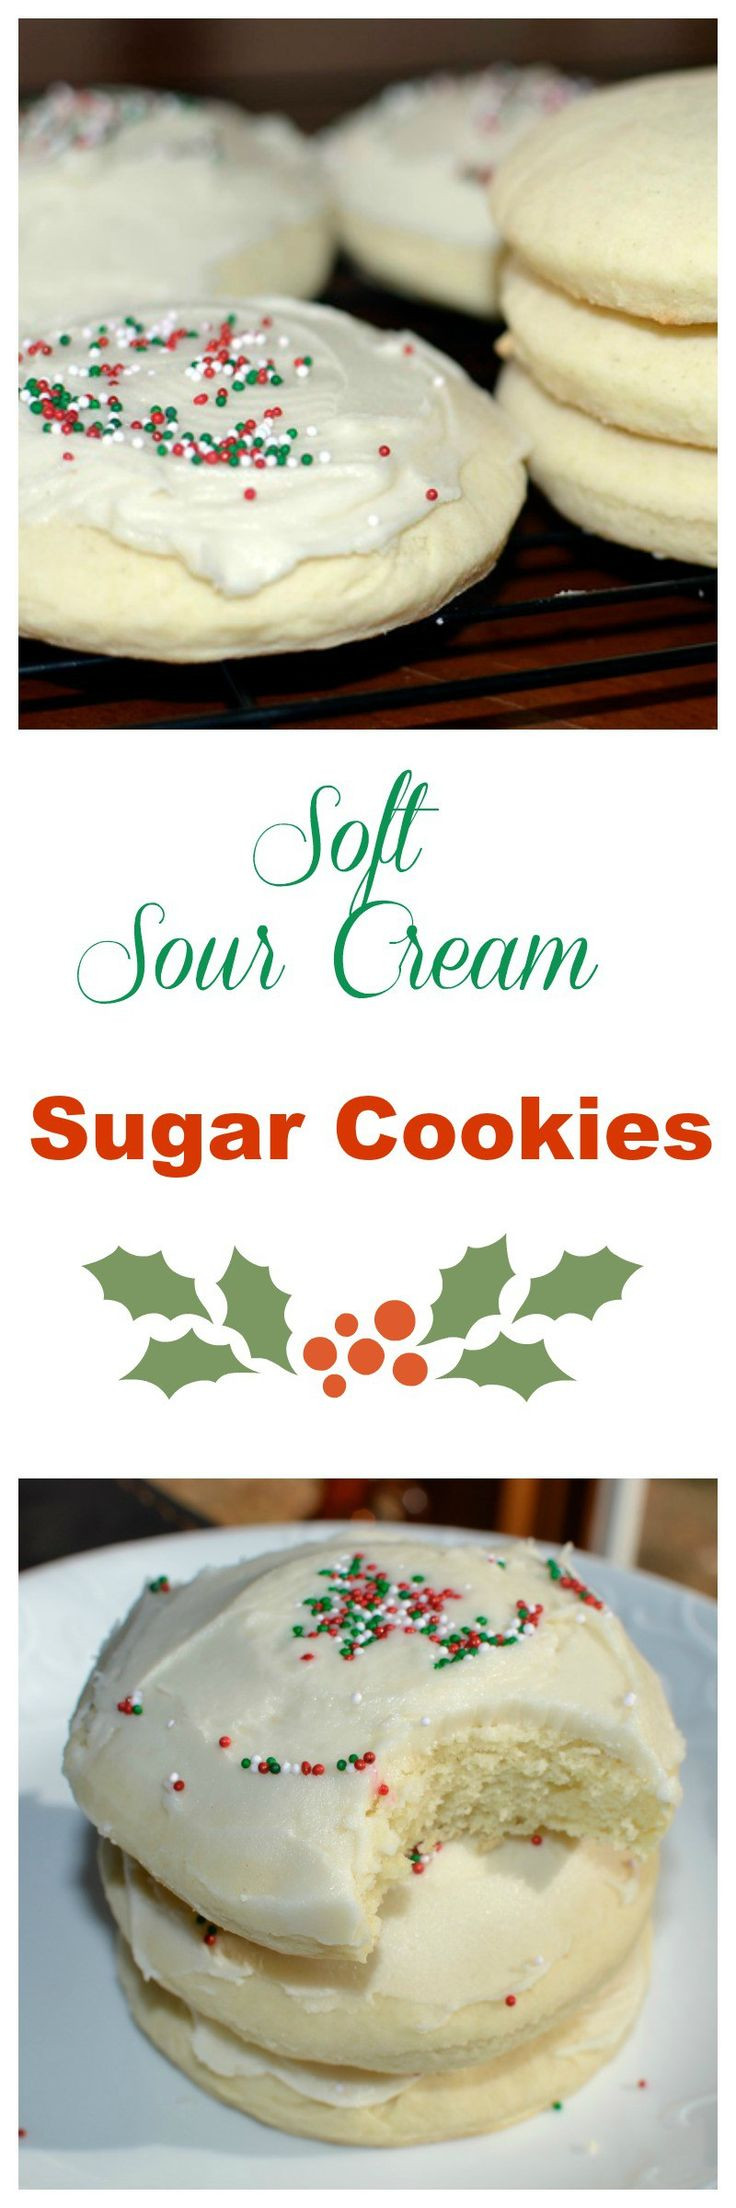 Soft Sour Cream Sugar Cookies
 Best 25 Sour cream cookies ideas on Pinterest